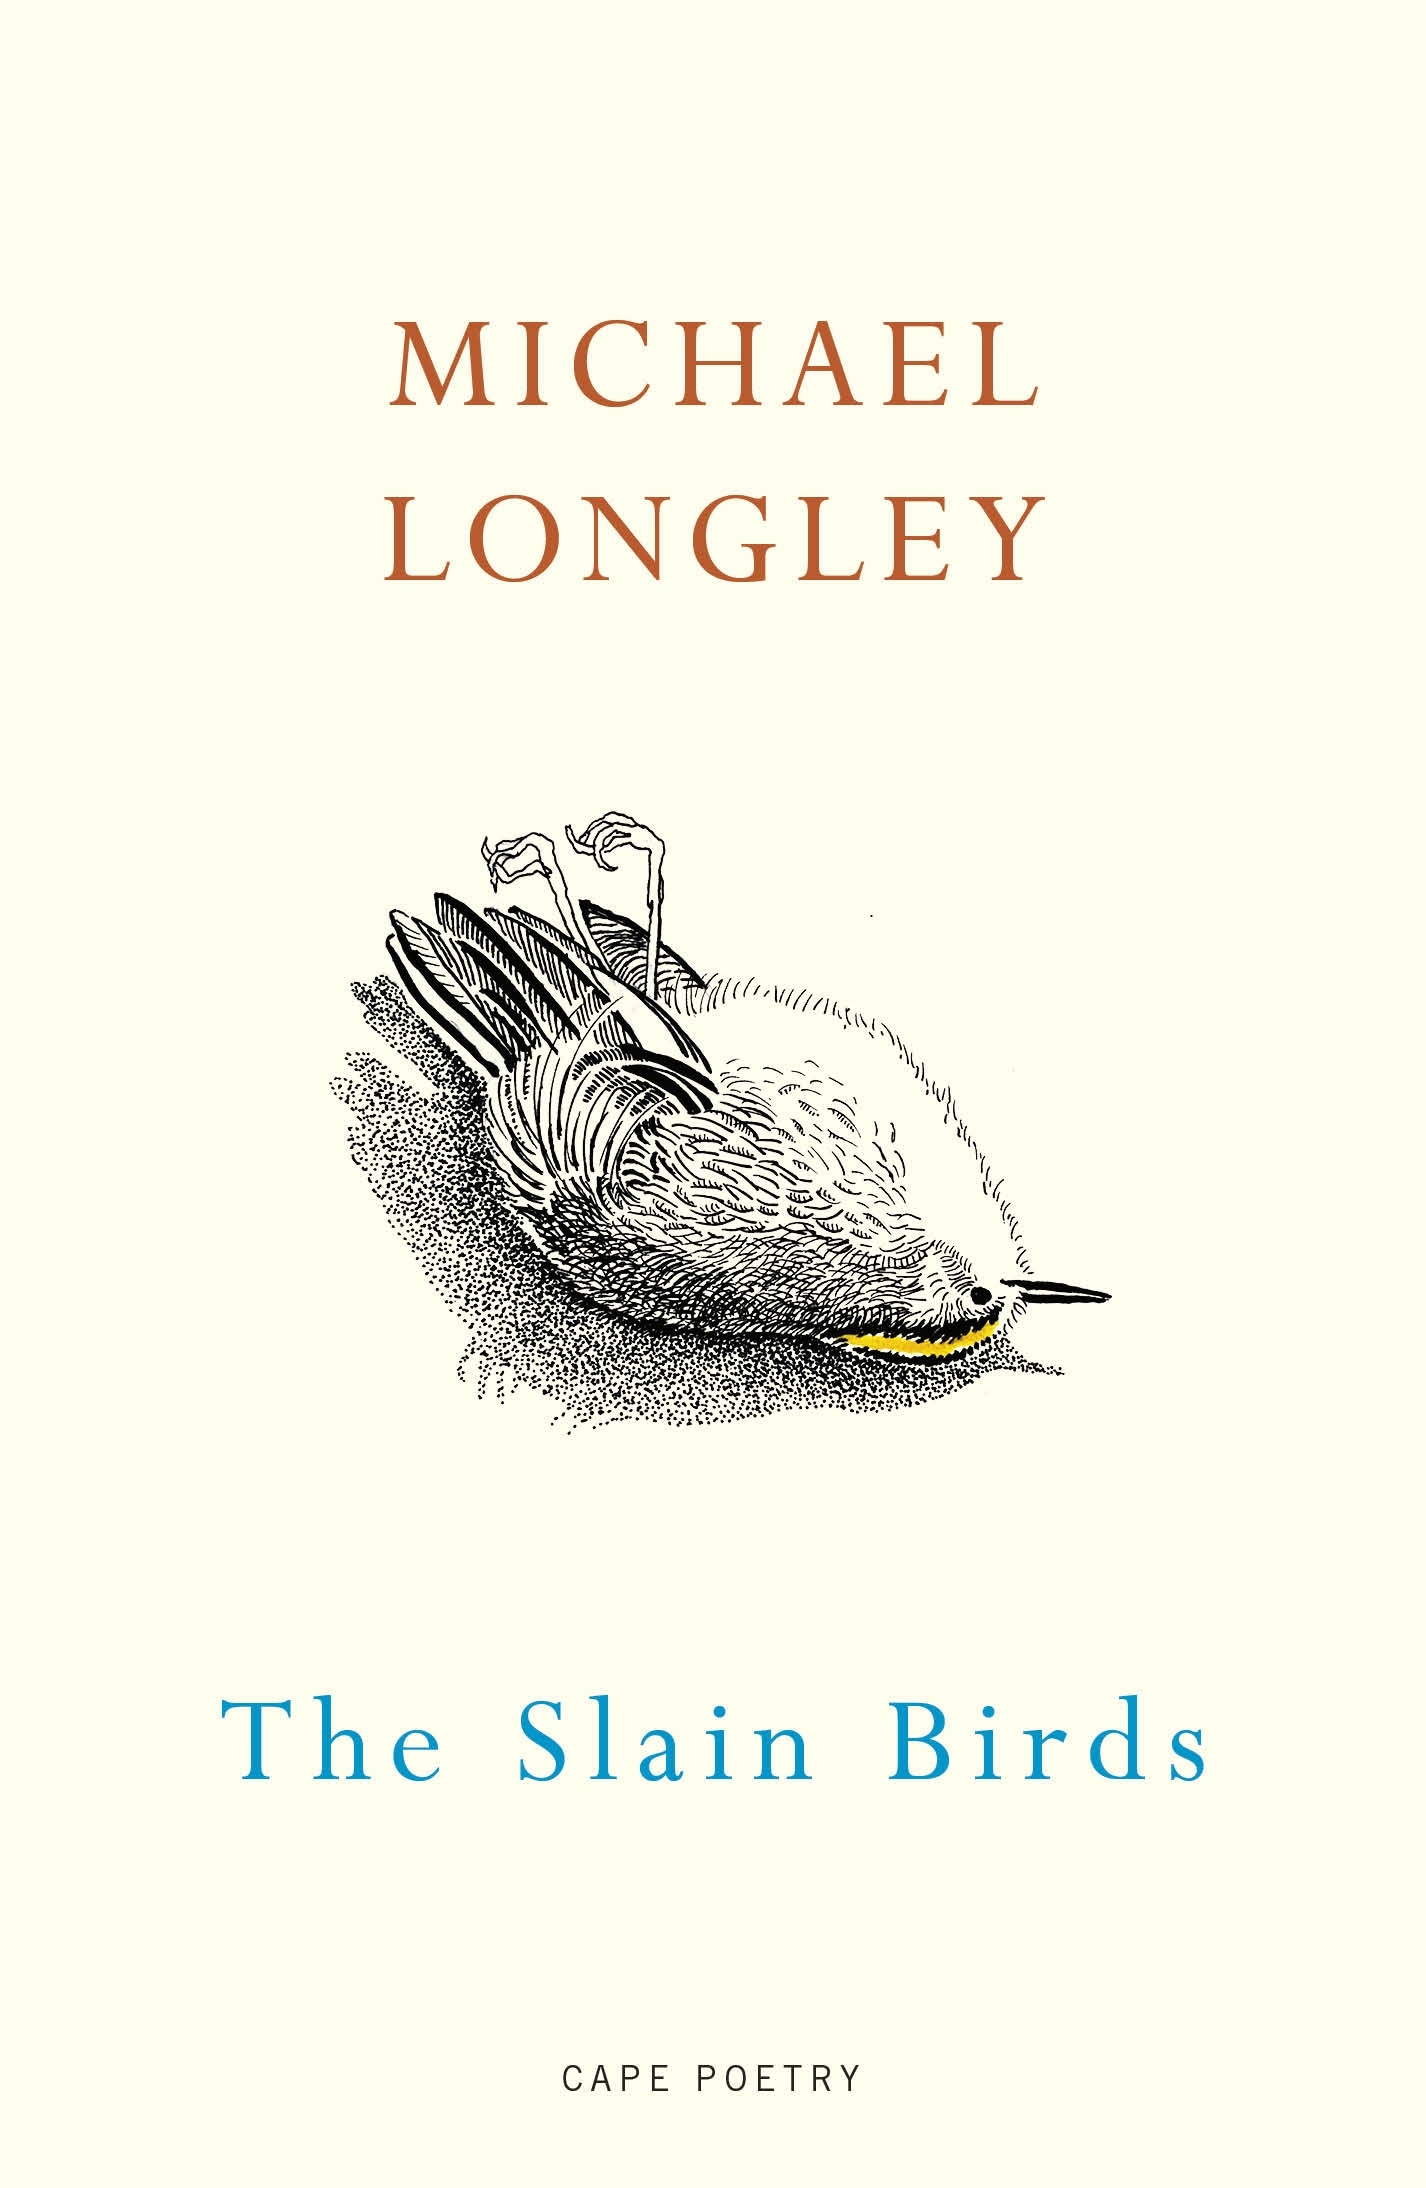 Book “The Slain Birds” by Michael Longley — September 1, 2022